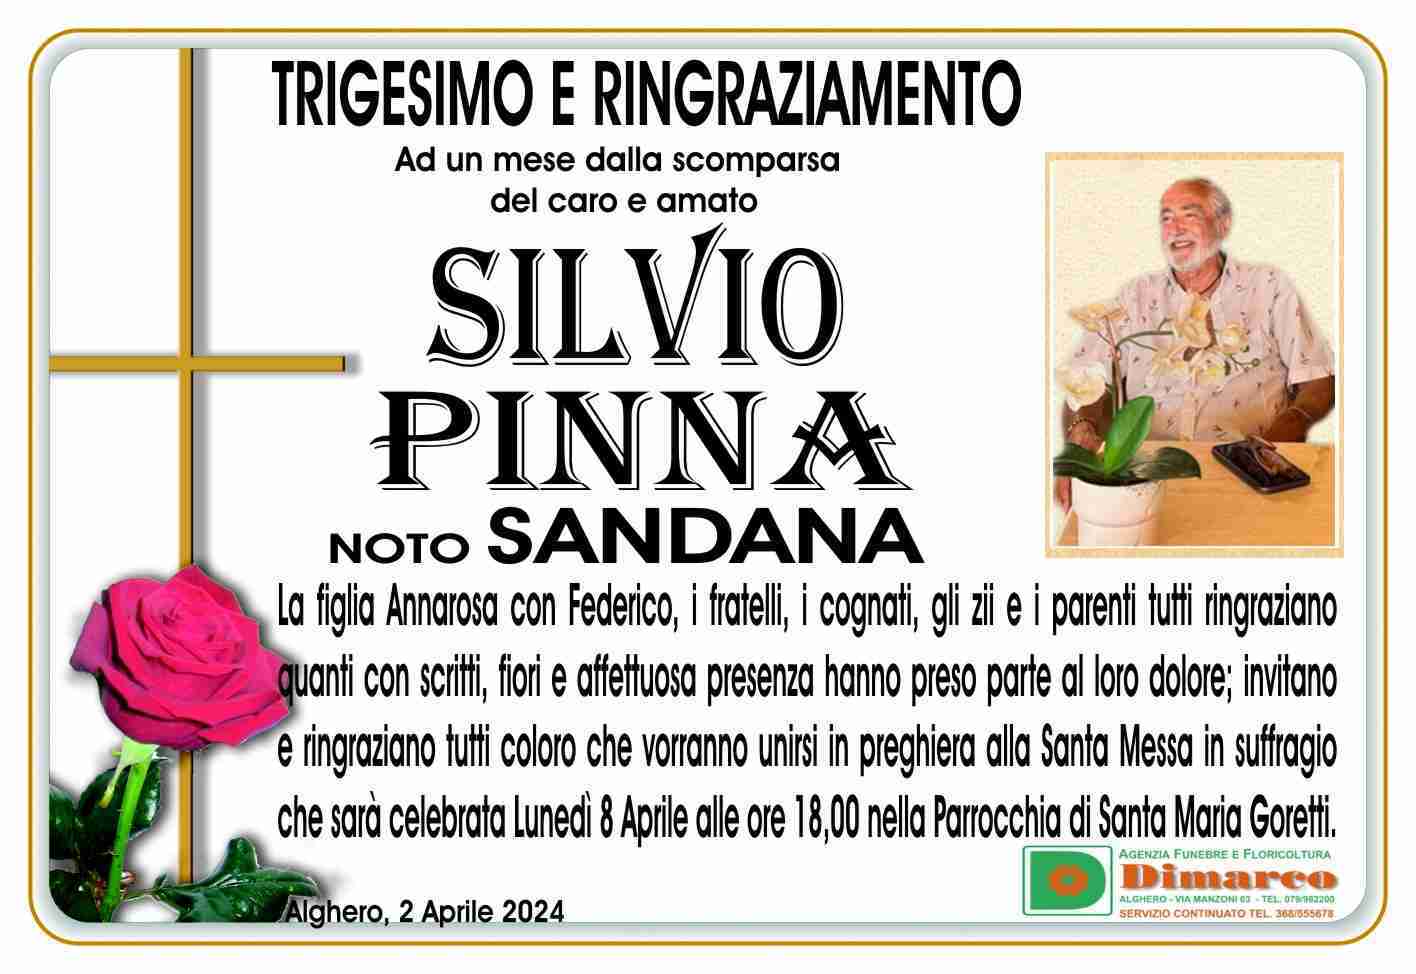 Silvio Pinna noto Sandana